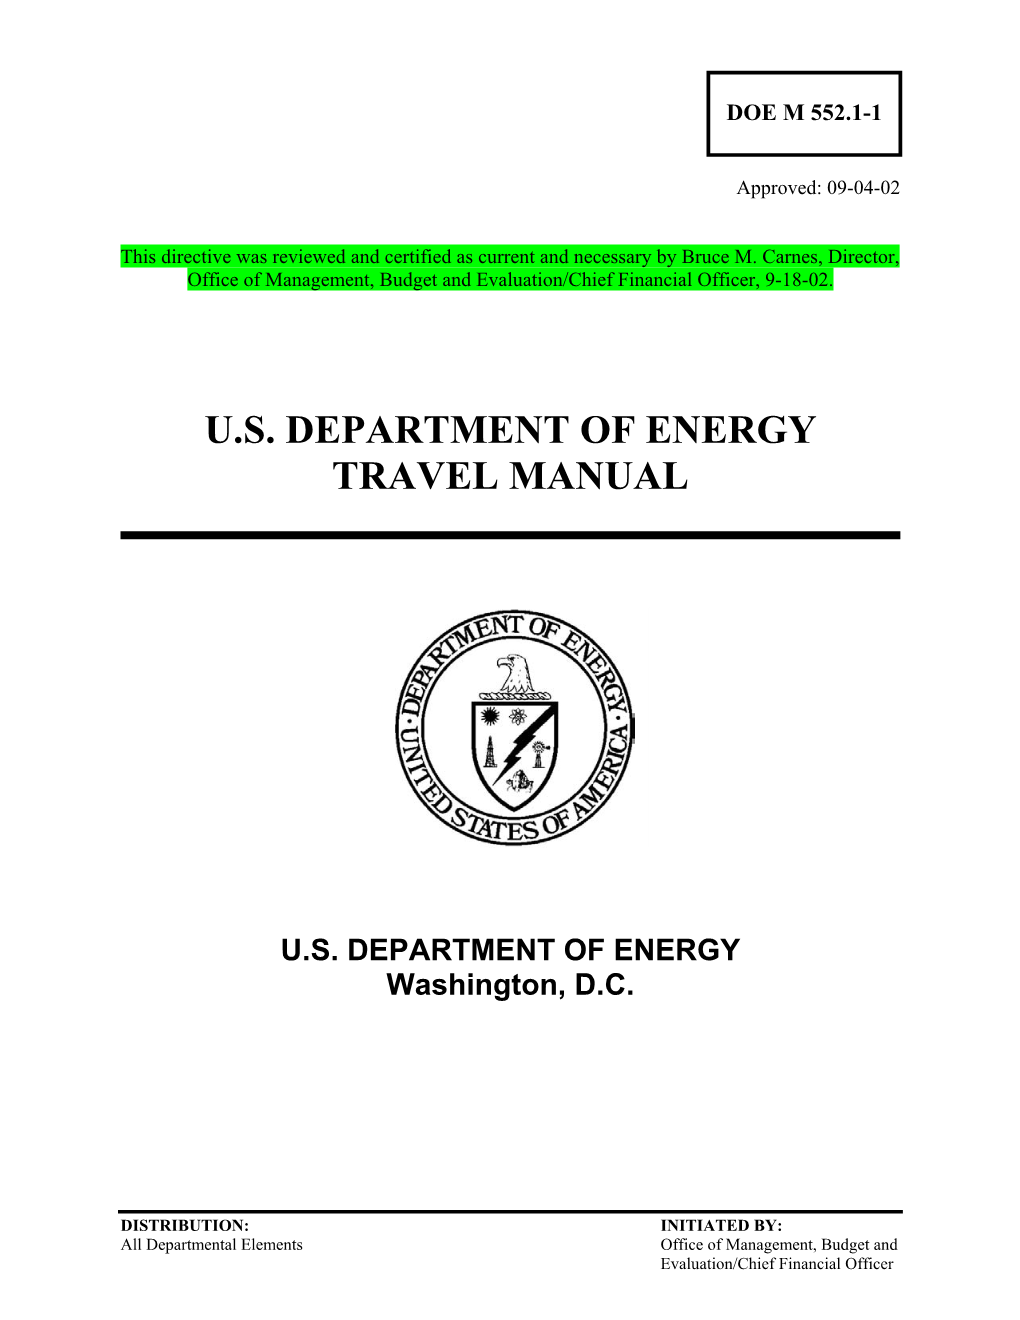 U.S. Department of Energy Travel Manual